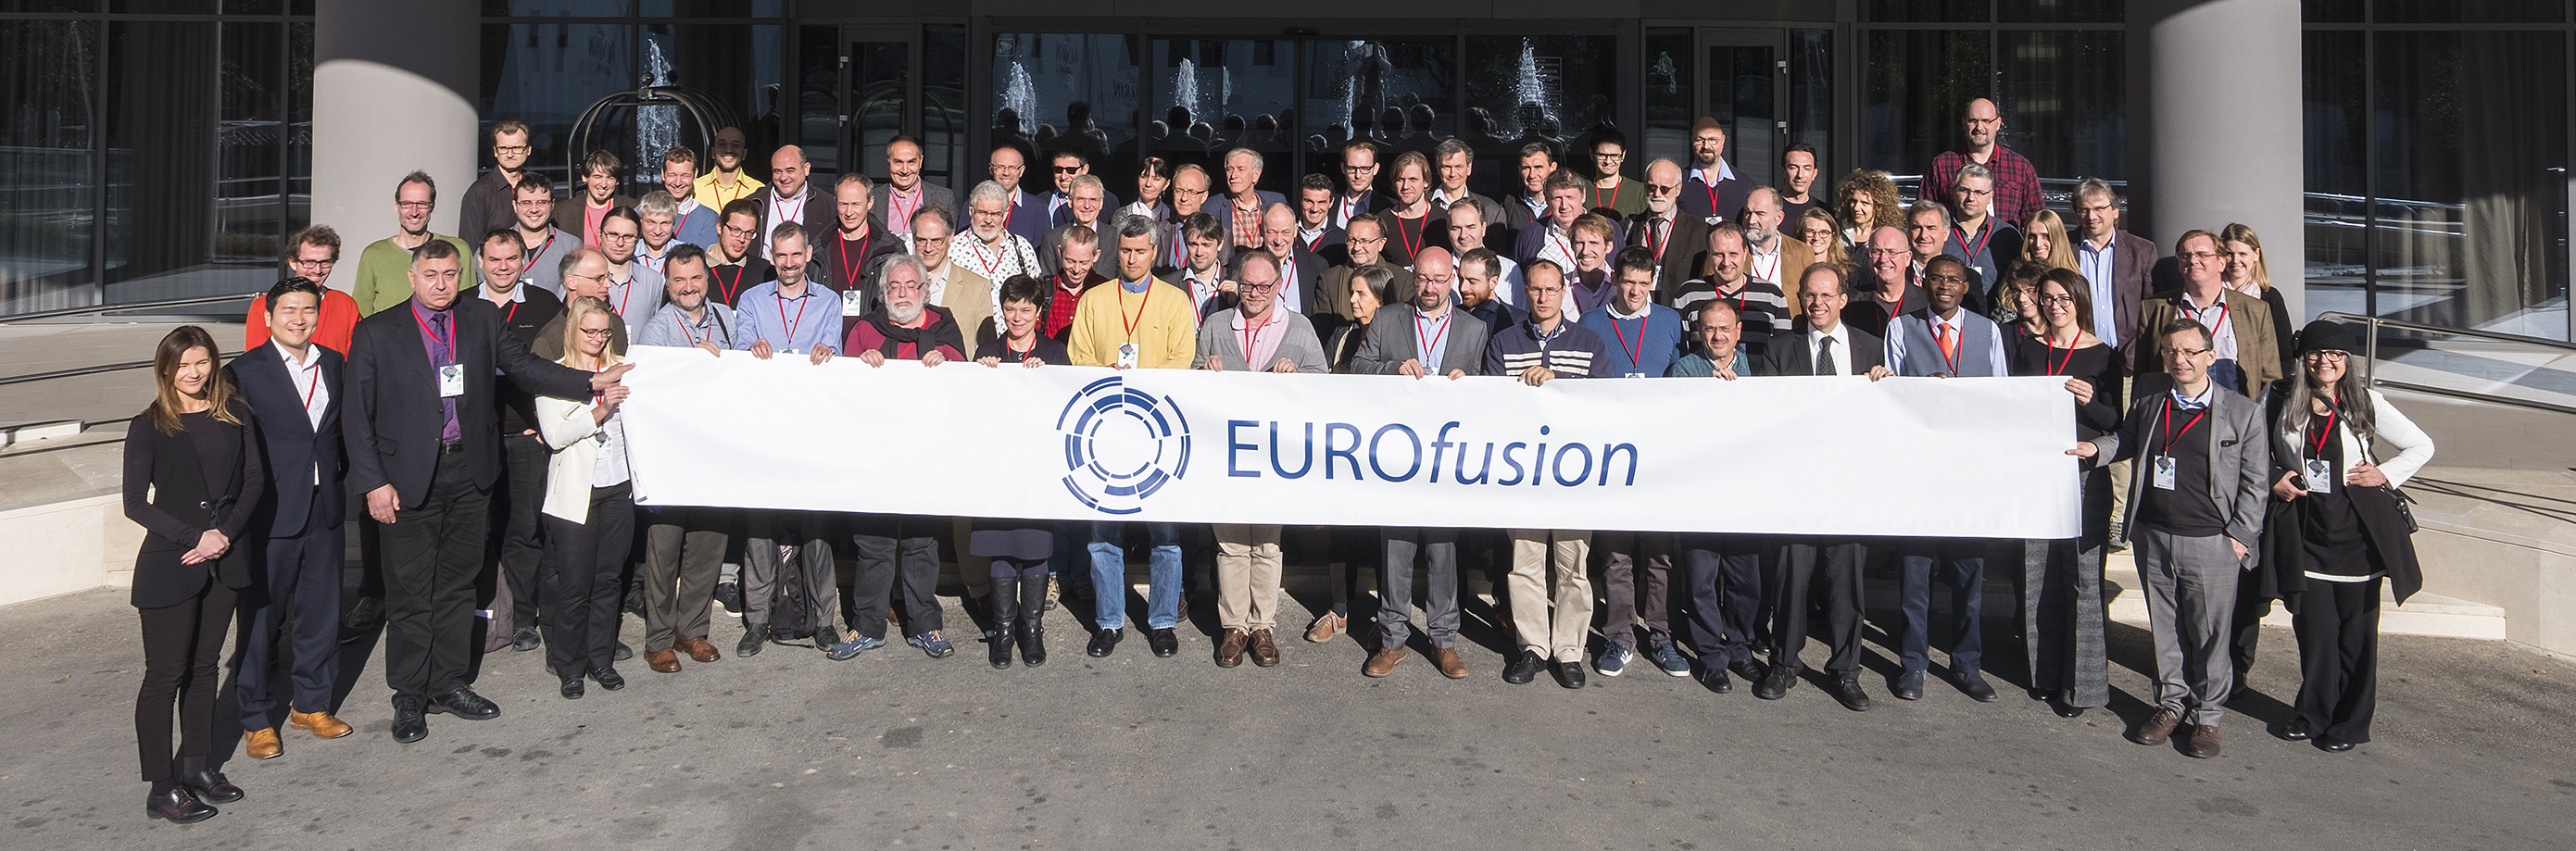 EUROfusion-conference-photo